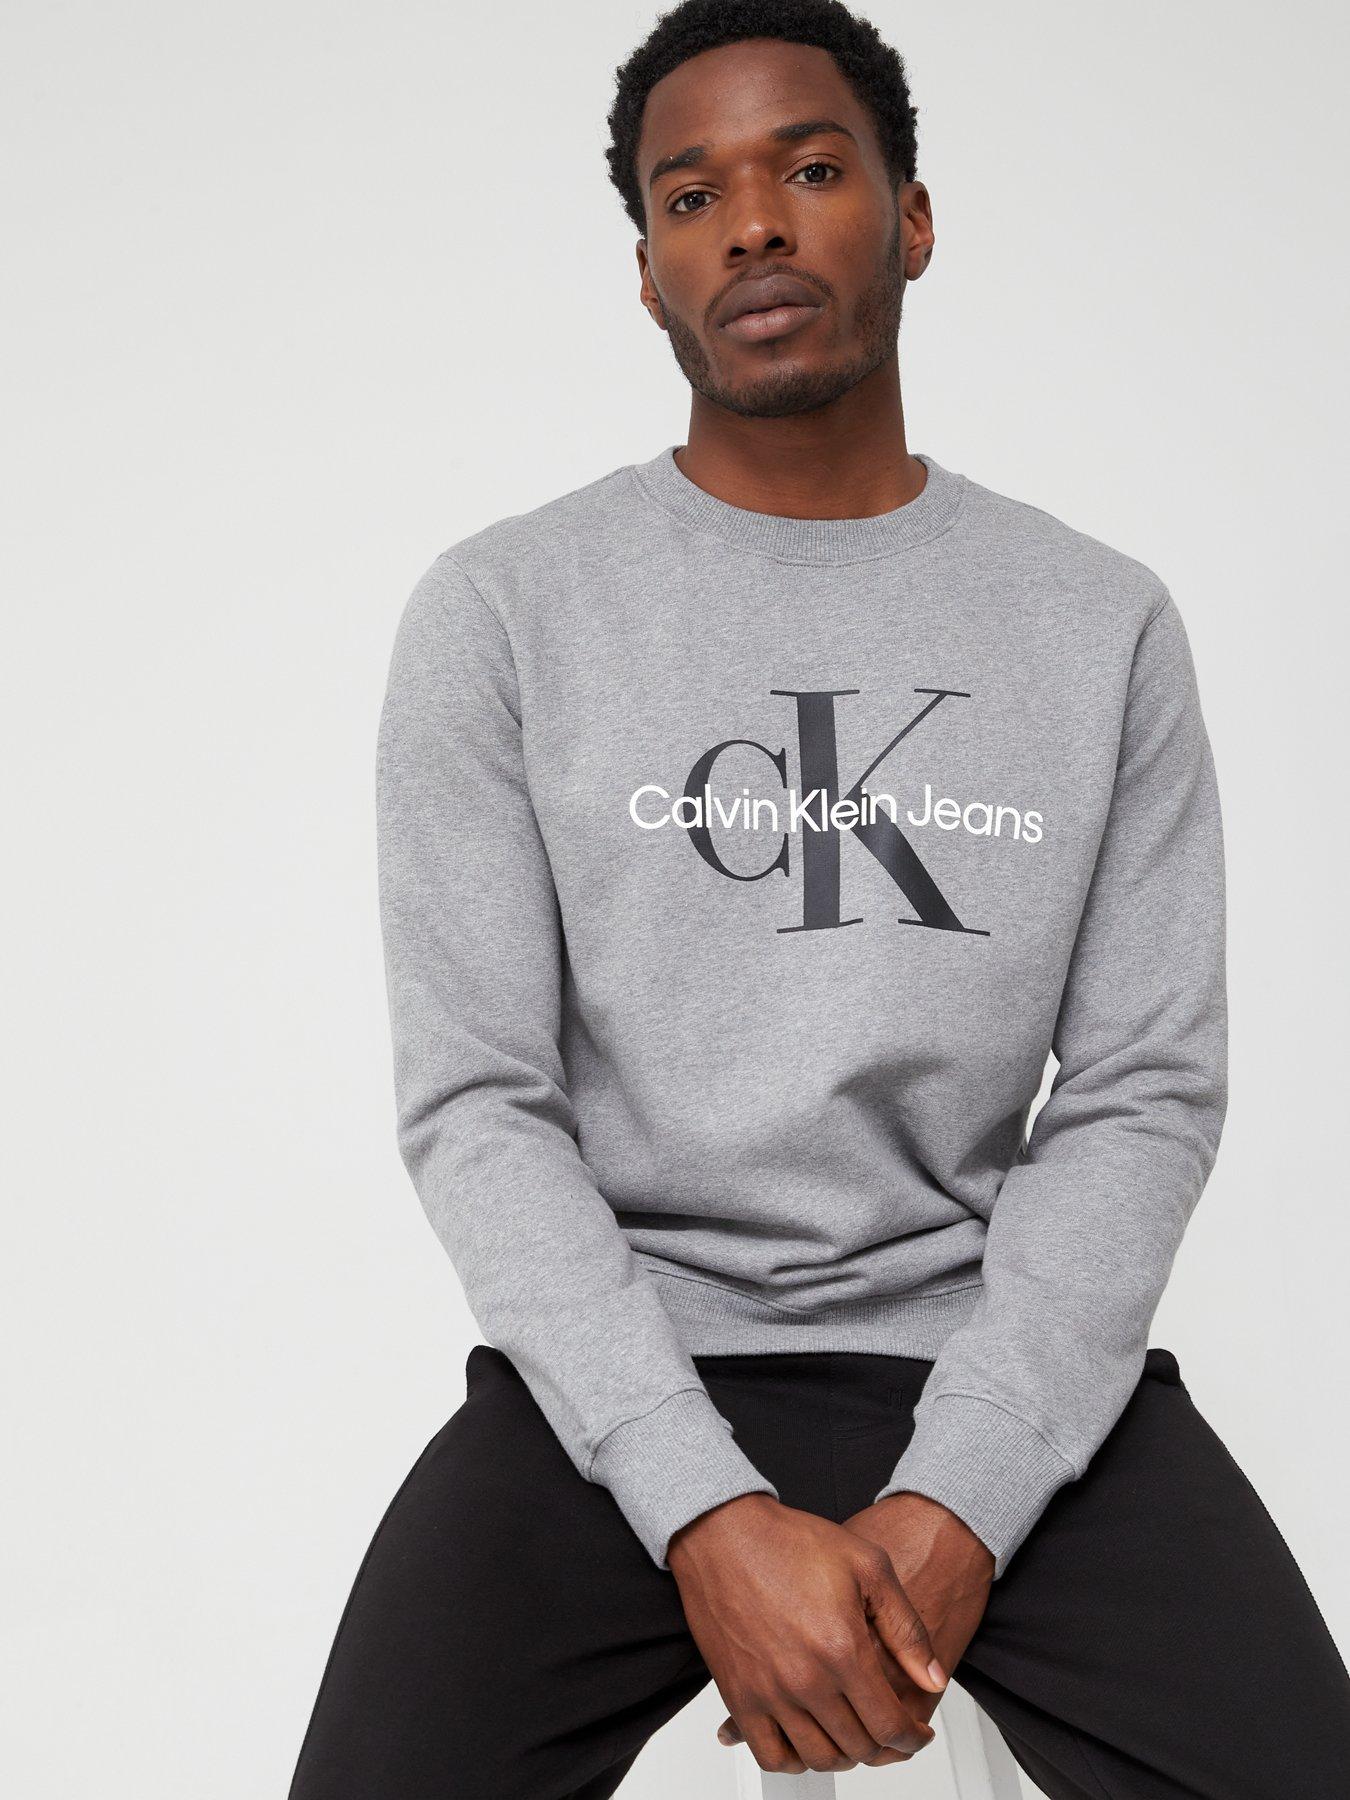 Bounce Start rigdom Calvin Klein Jeans Monogram Logo Sweatshirt - Mid Grey Heather | very.co.uk